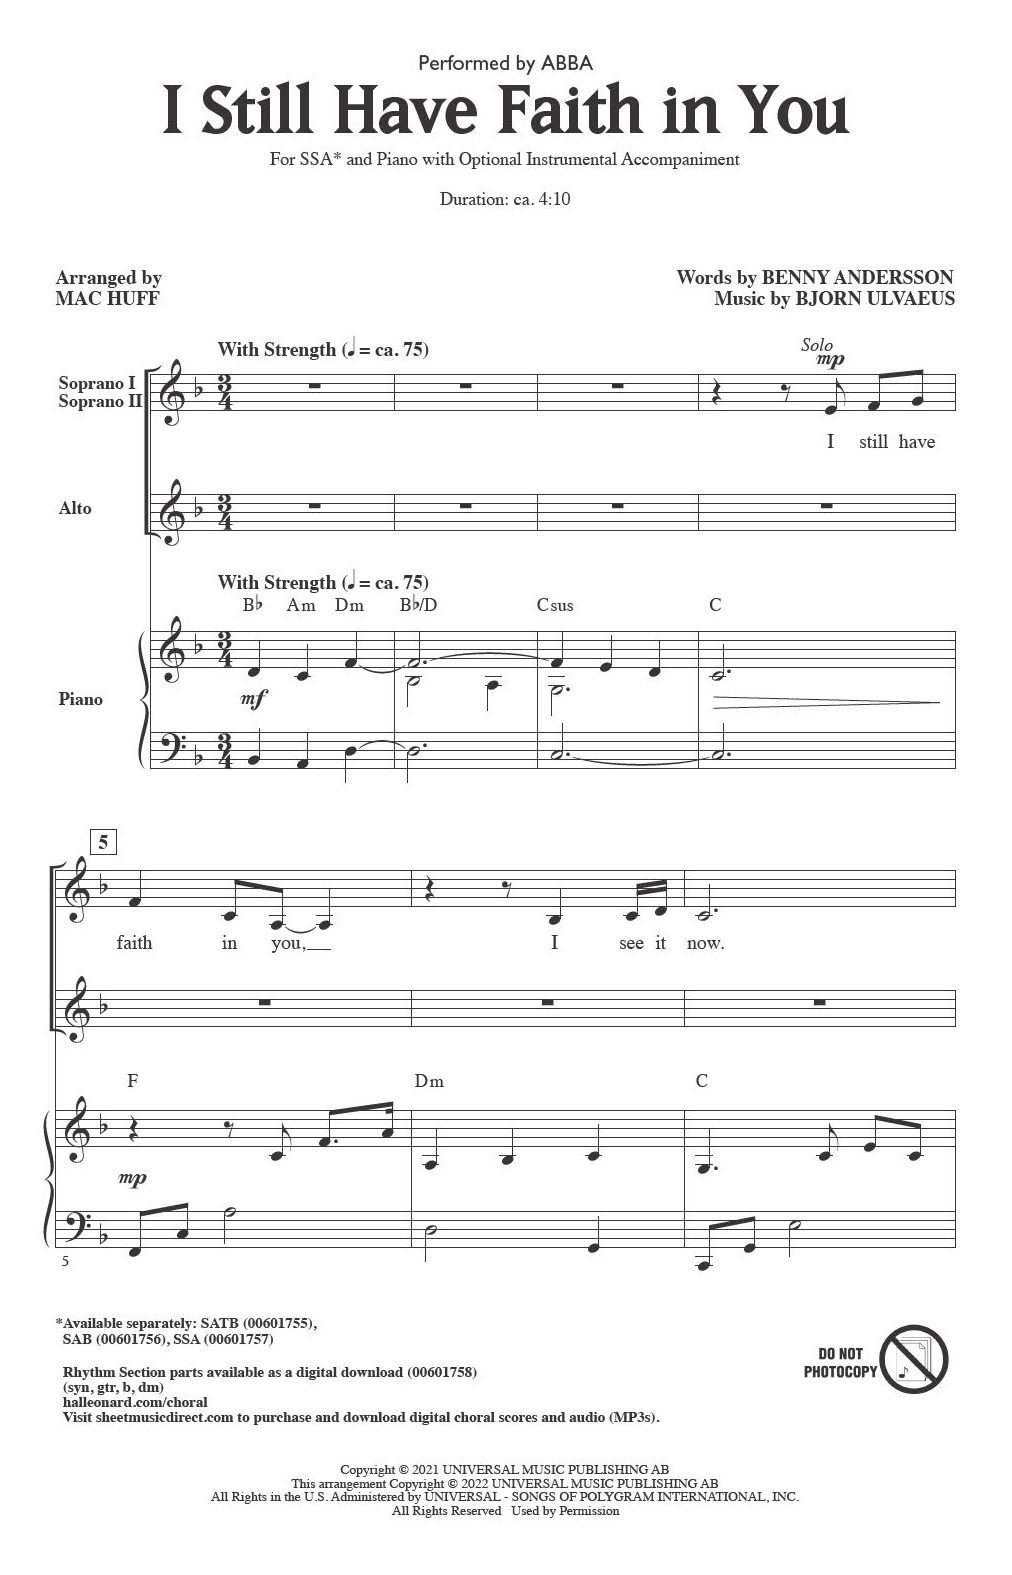 ABBA I Still Have Faith In You (arr. Mac Huff) Sheet Music Notes & Chords for SAB Choir - Download or Print PDF